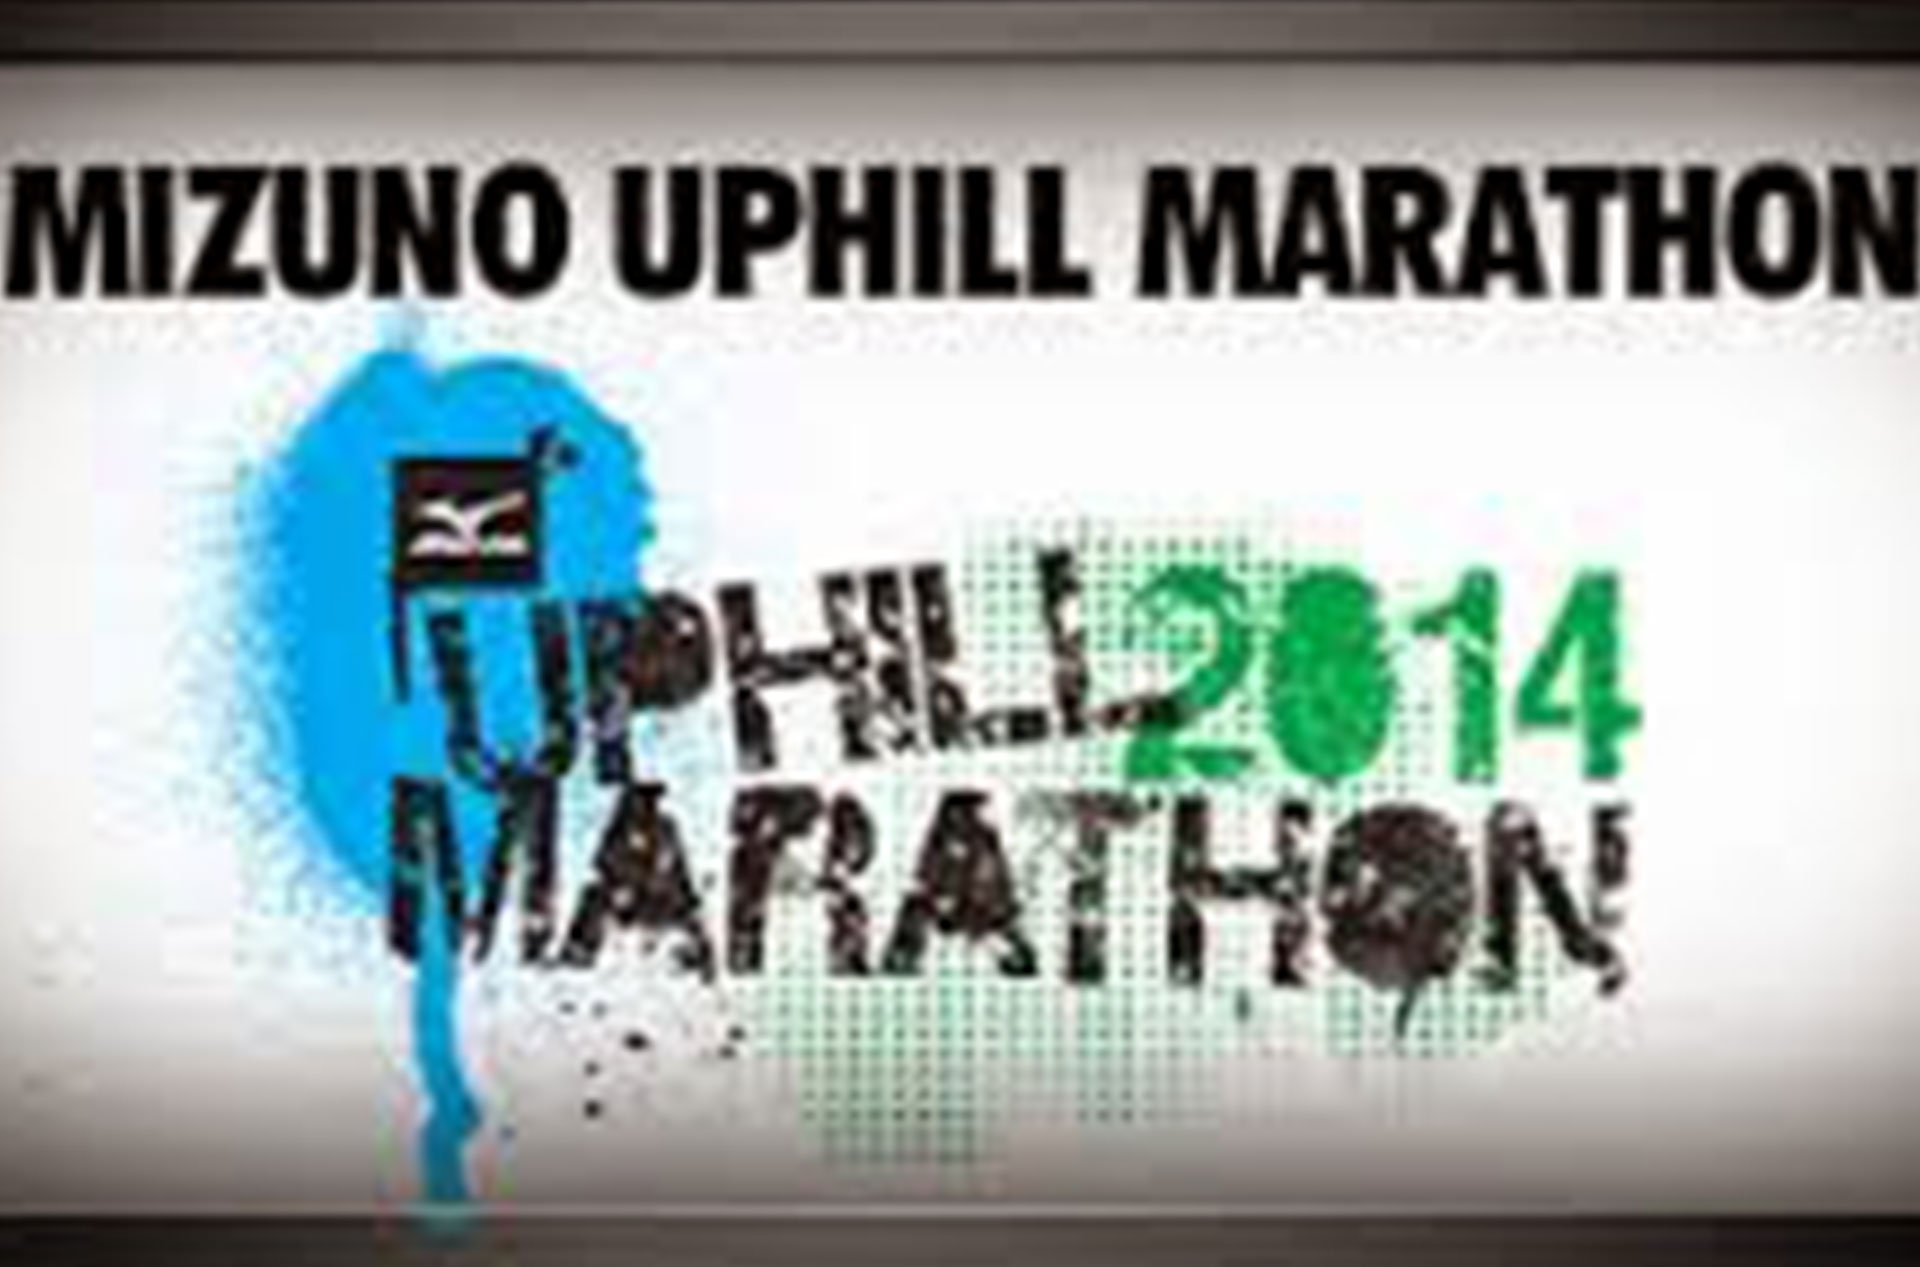 Mizuno-uphill-maratona-Triatlhon-Assessoria-Esportiva-Marcia-Ferreira-Triathlon-MFTeam-I.jpg